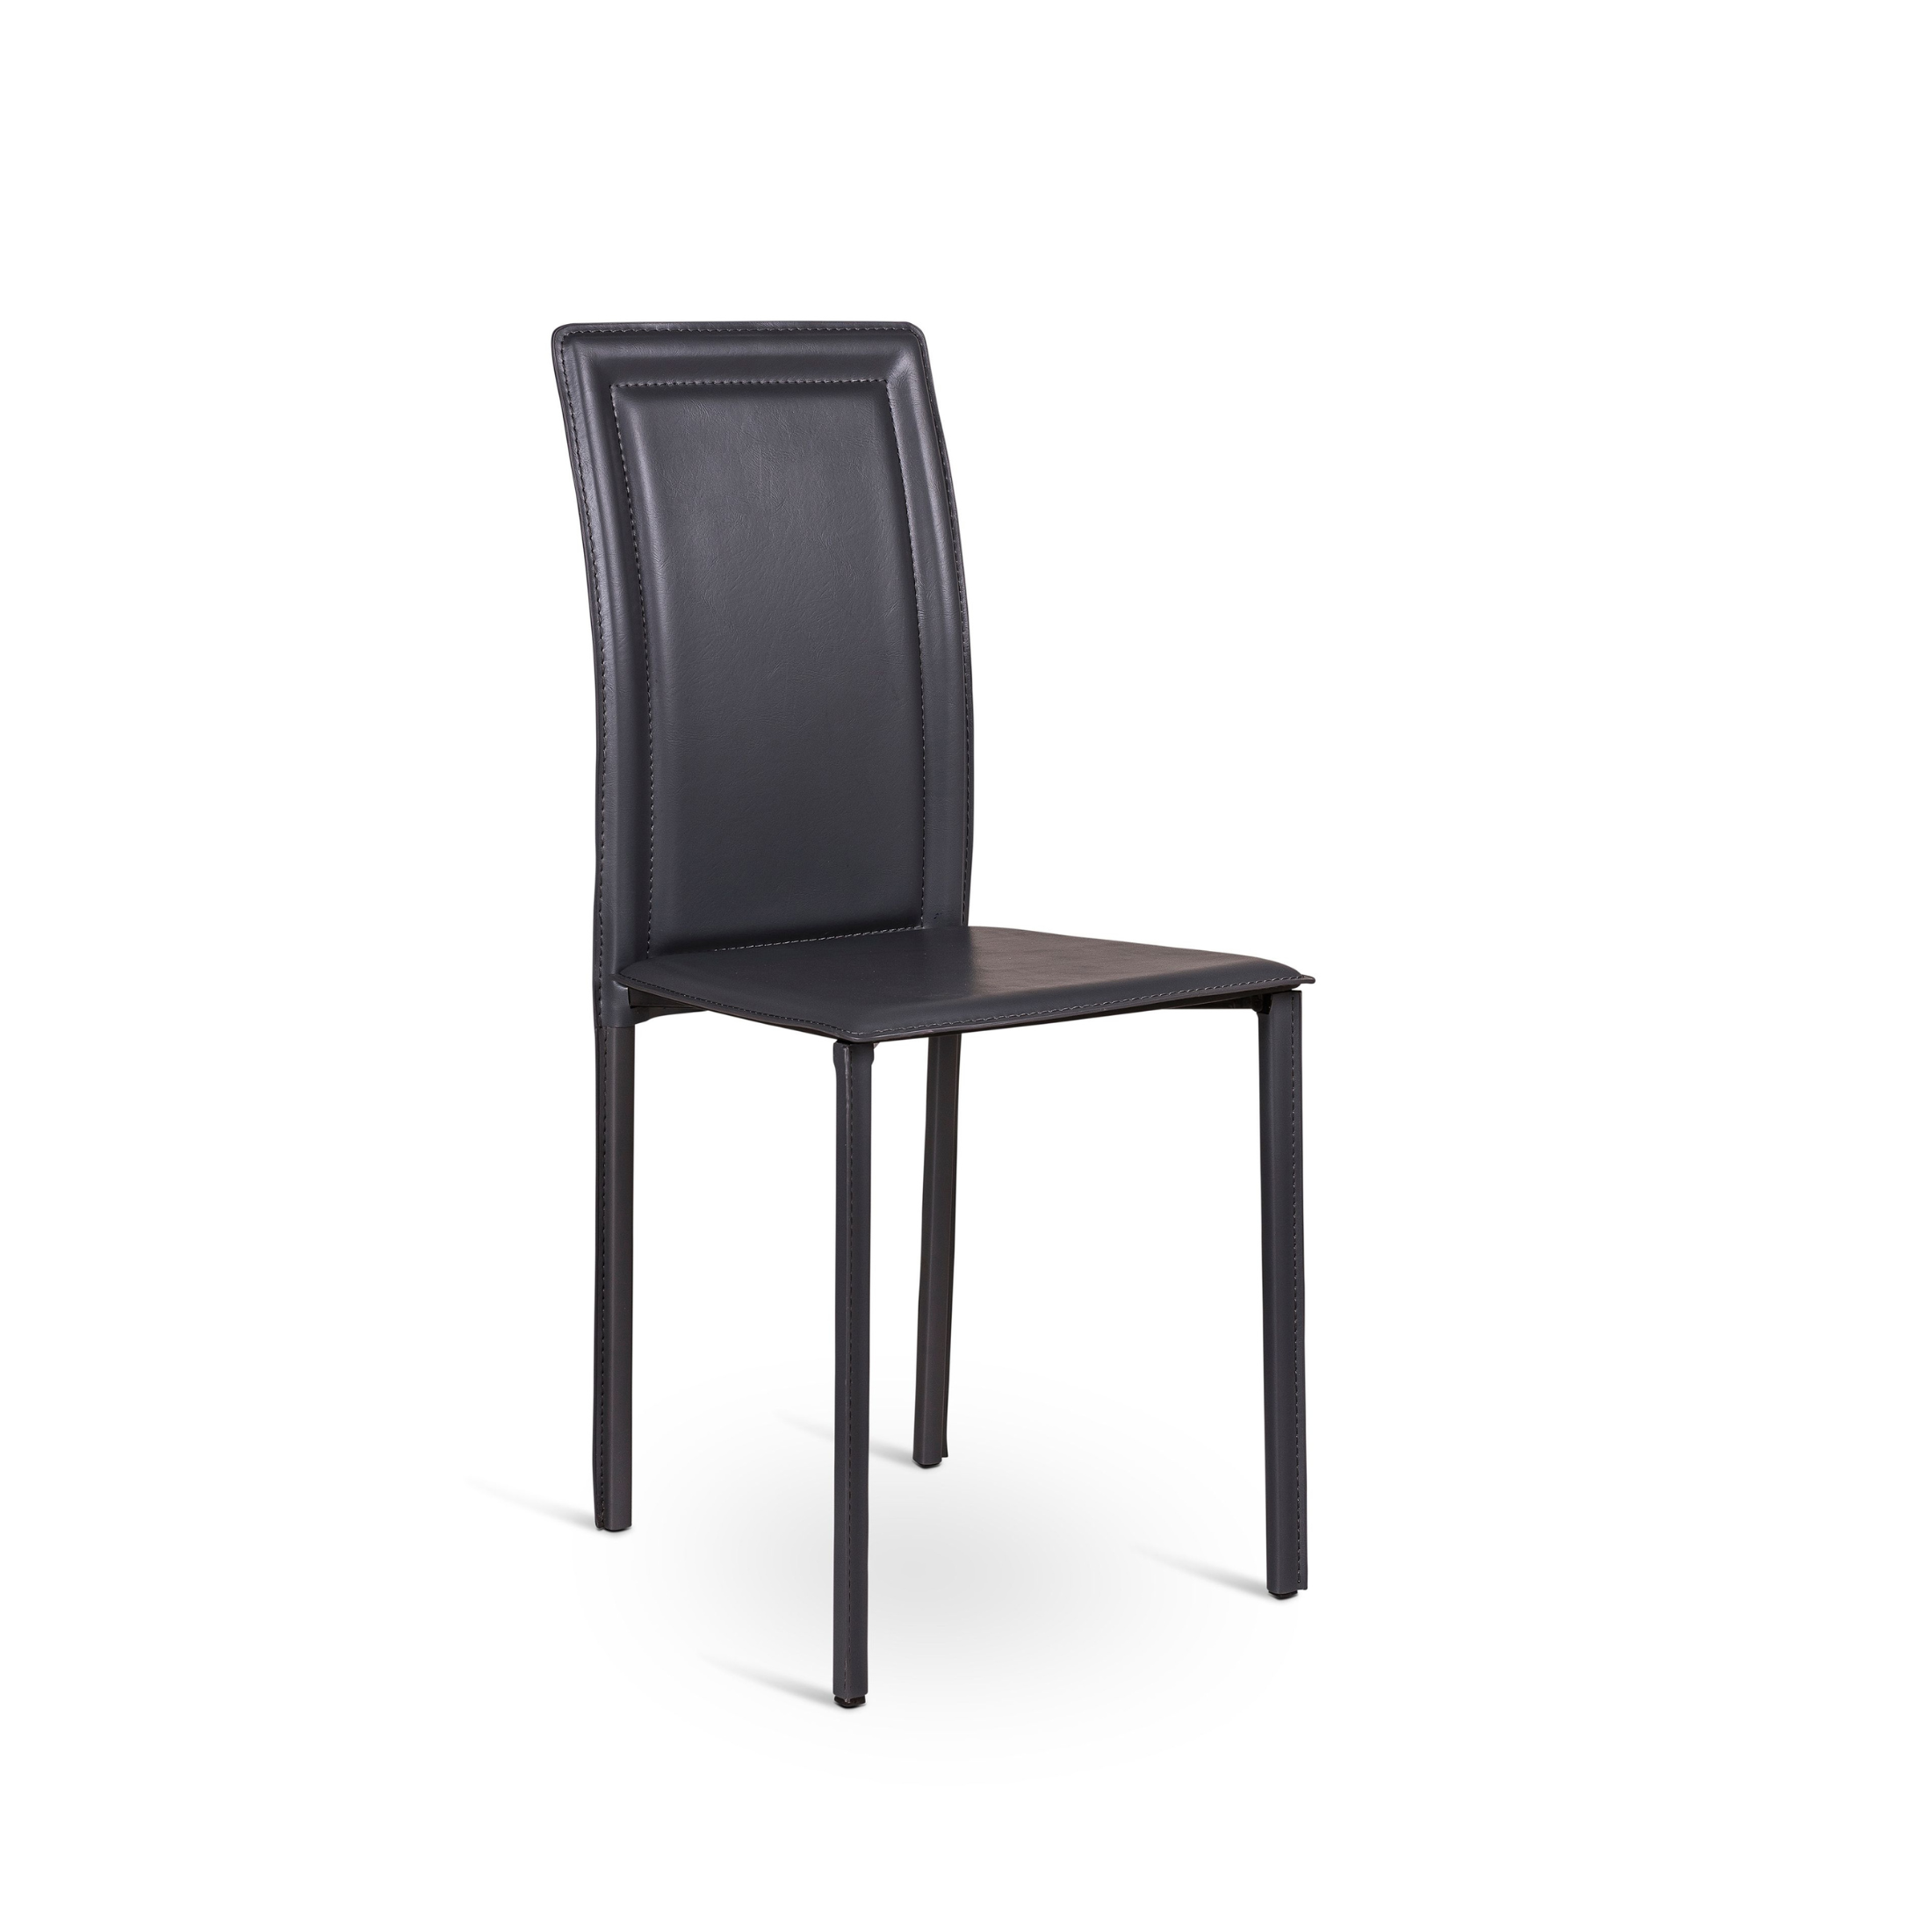 Chaise moderne empilable "Net" simili cuir marron 39x41 cm 90h